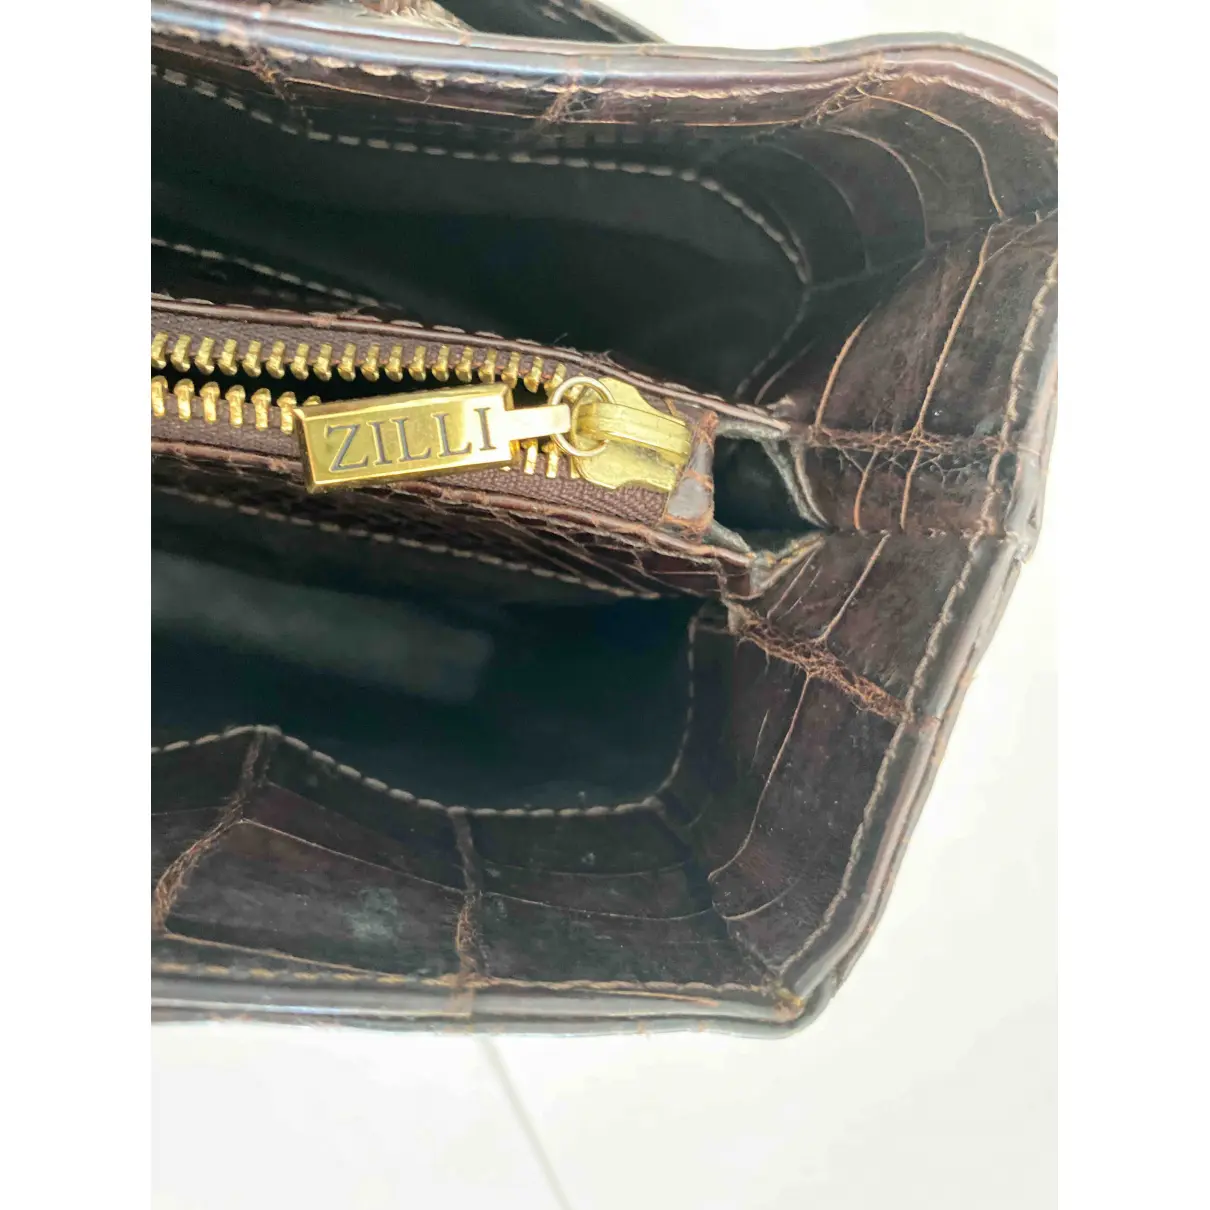 Crocodile handbag Zilli - Vintage